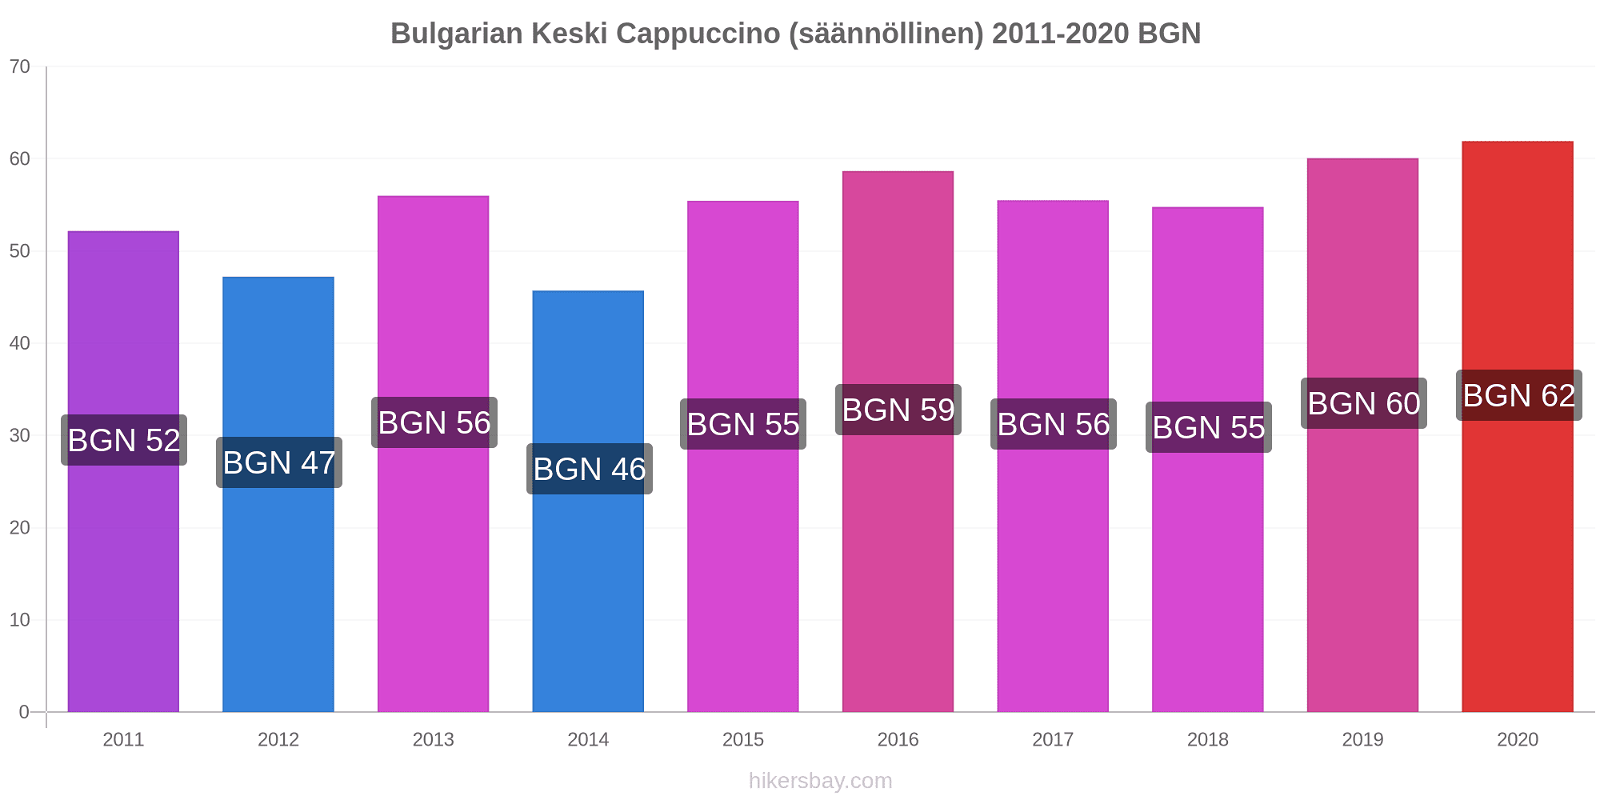 Bulgarian Keski hintojen muutokset Cappuccino (säännöllinen) hikersbay.com